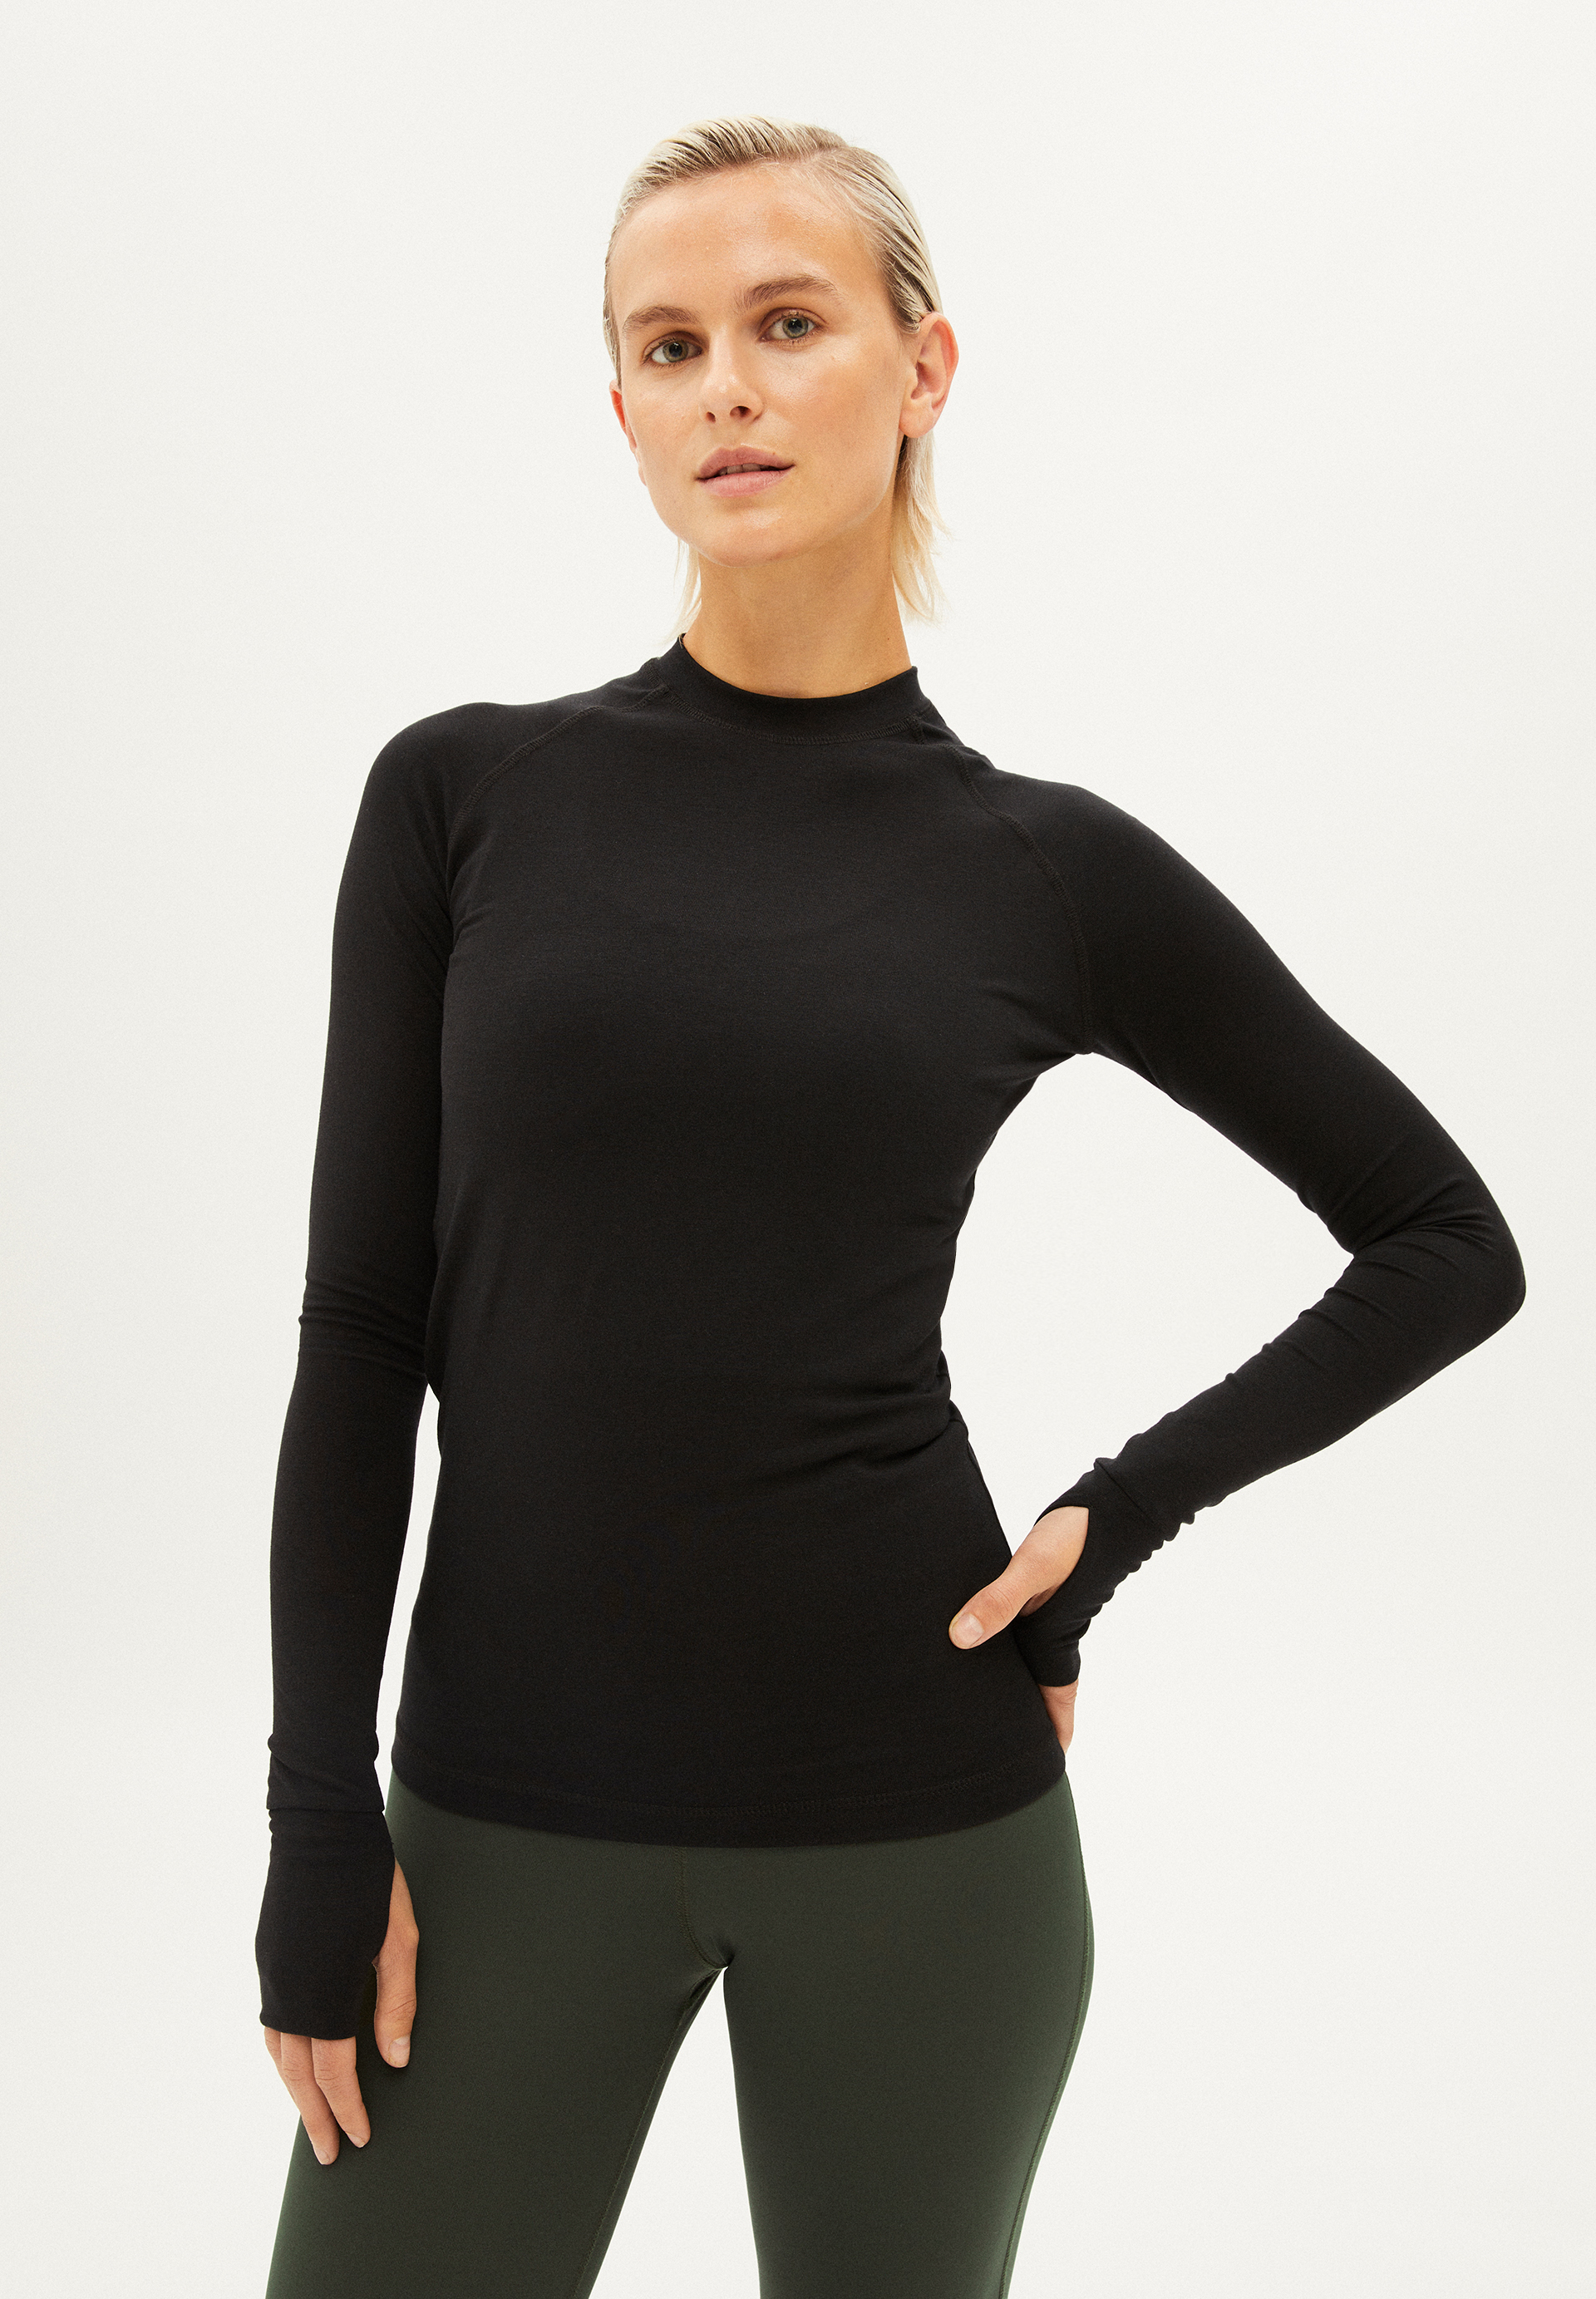 NAARAARAA Activewear Longsleeve Slim Fit aus TENCEL™ Lyocell Mix